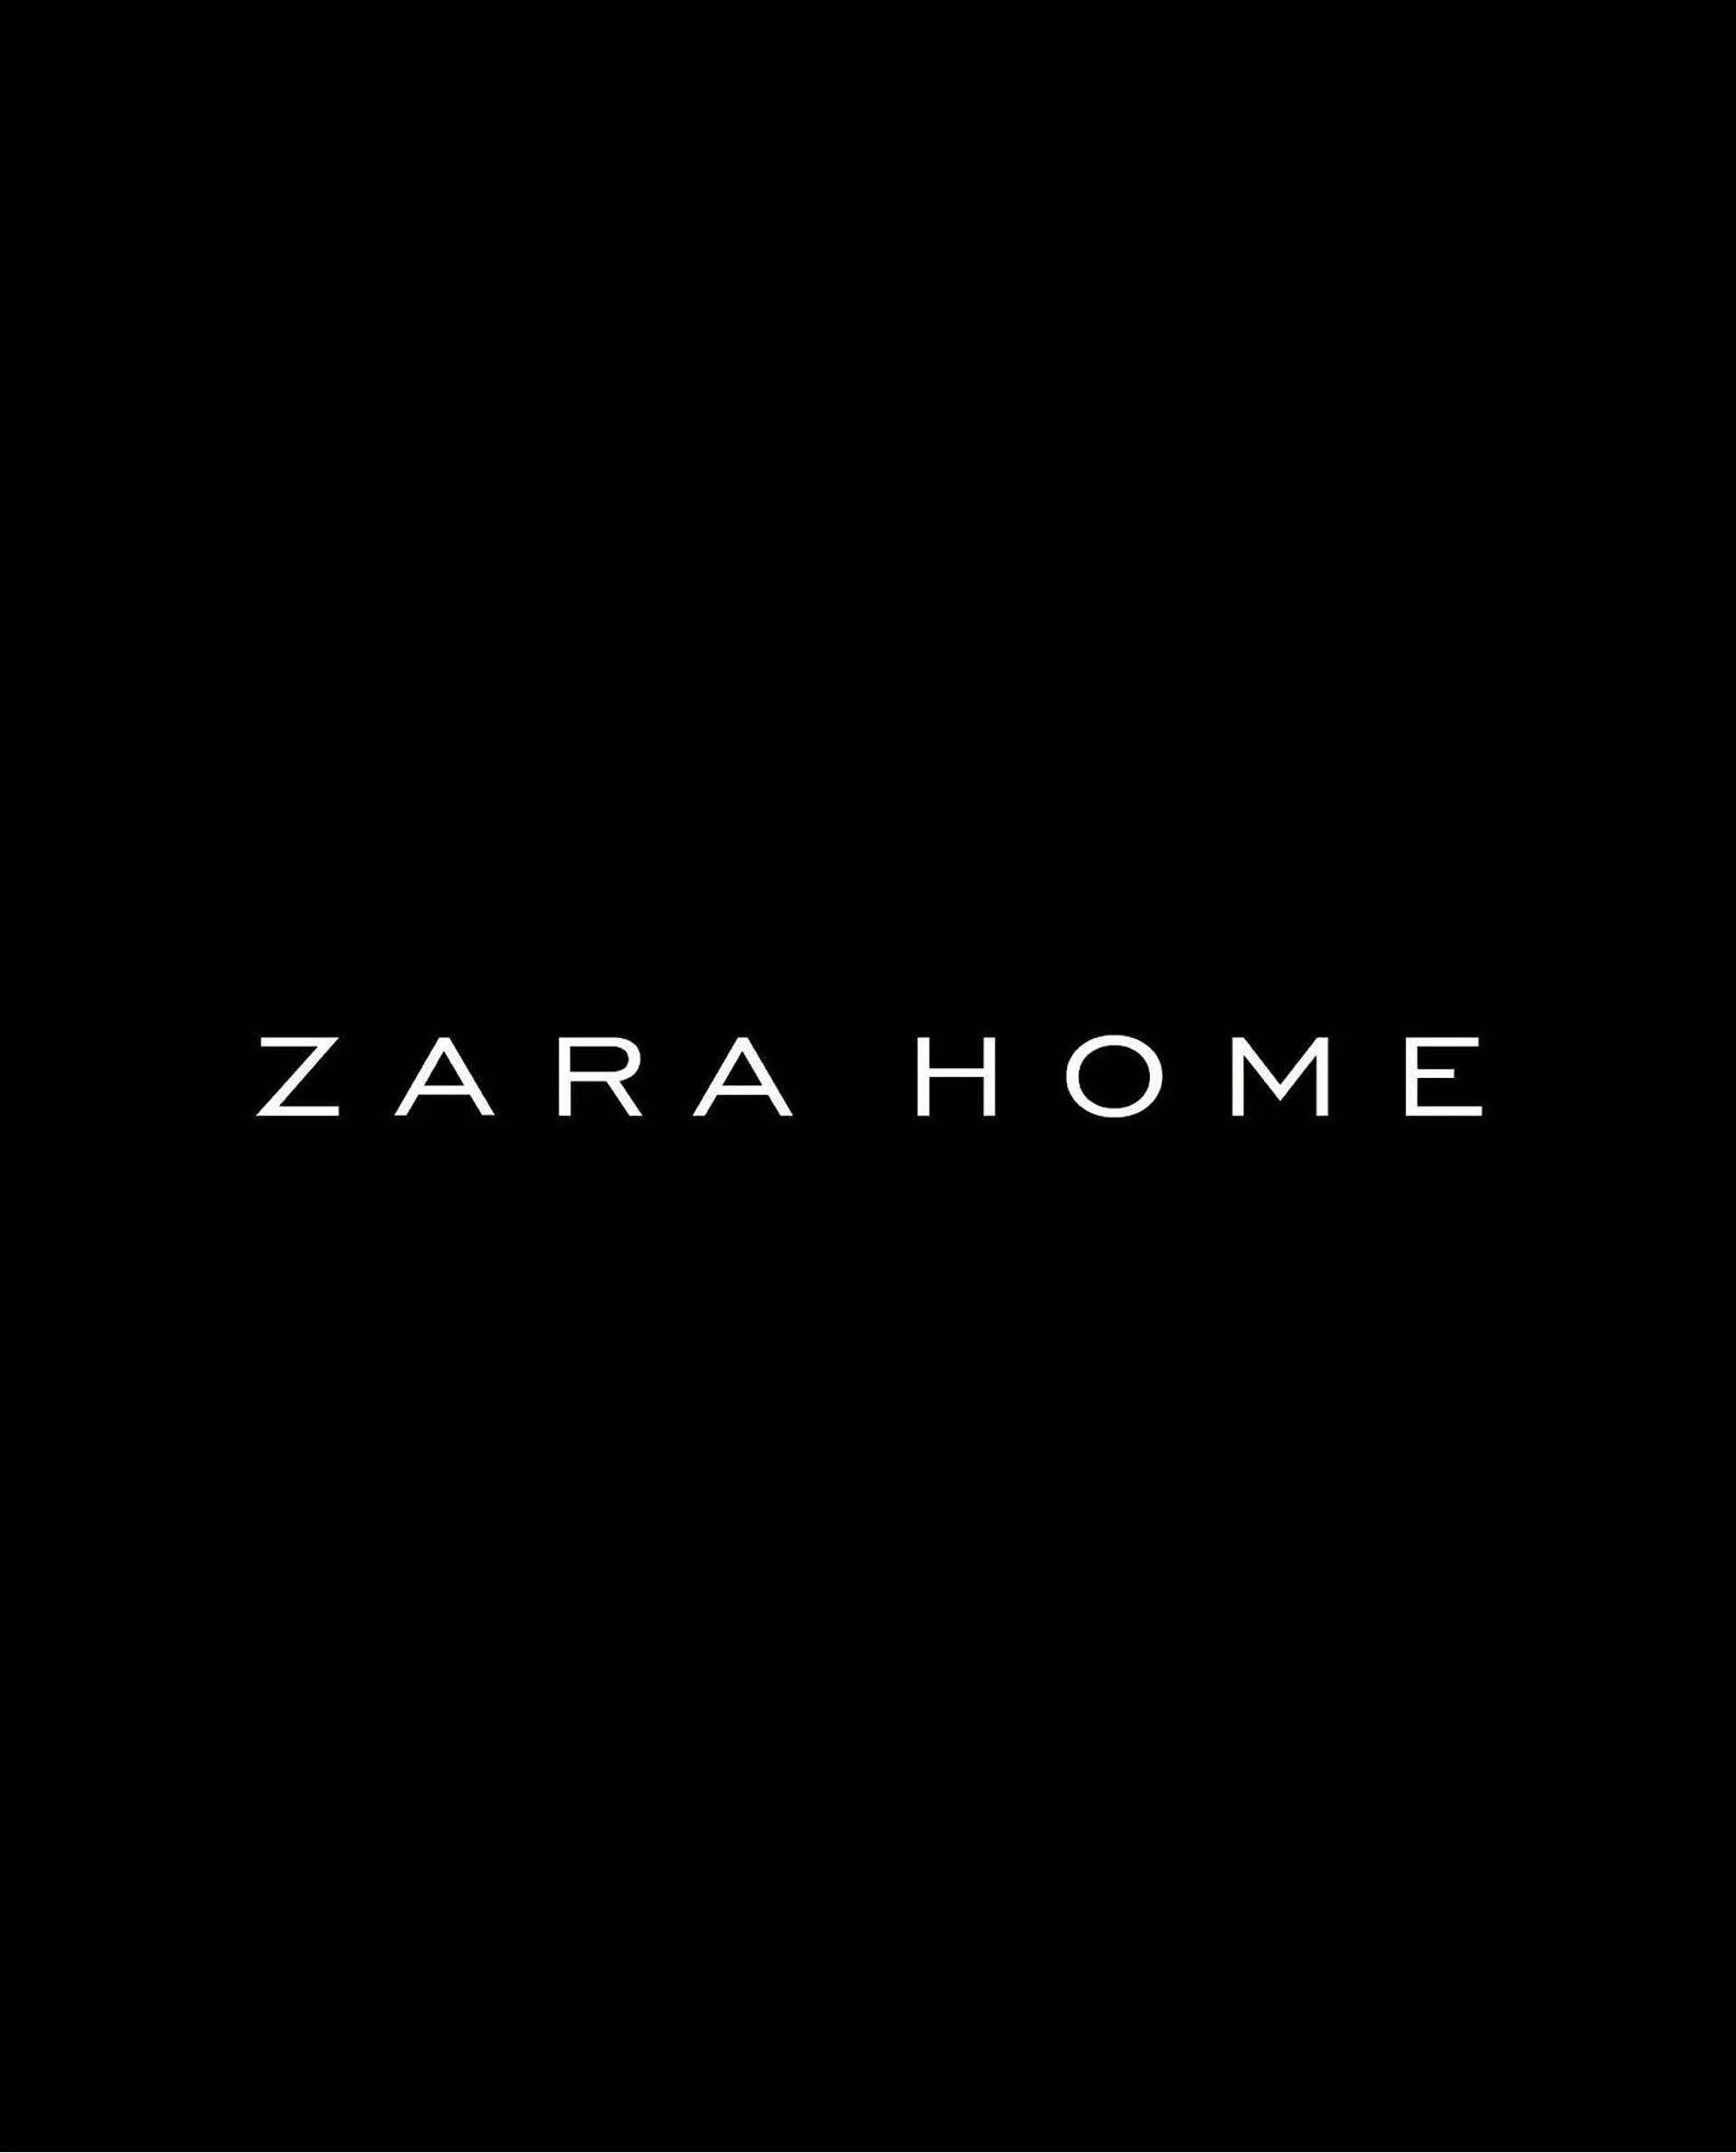 ZARA HOME reklamblad - 12